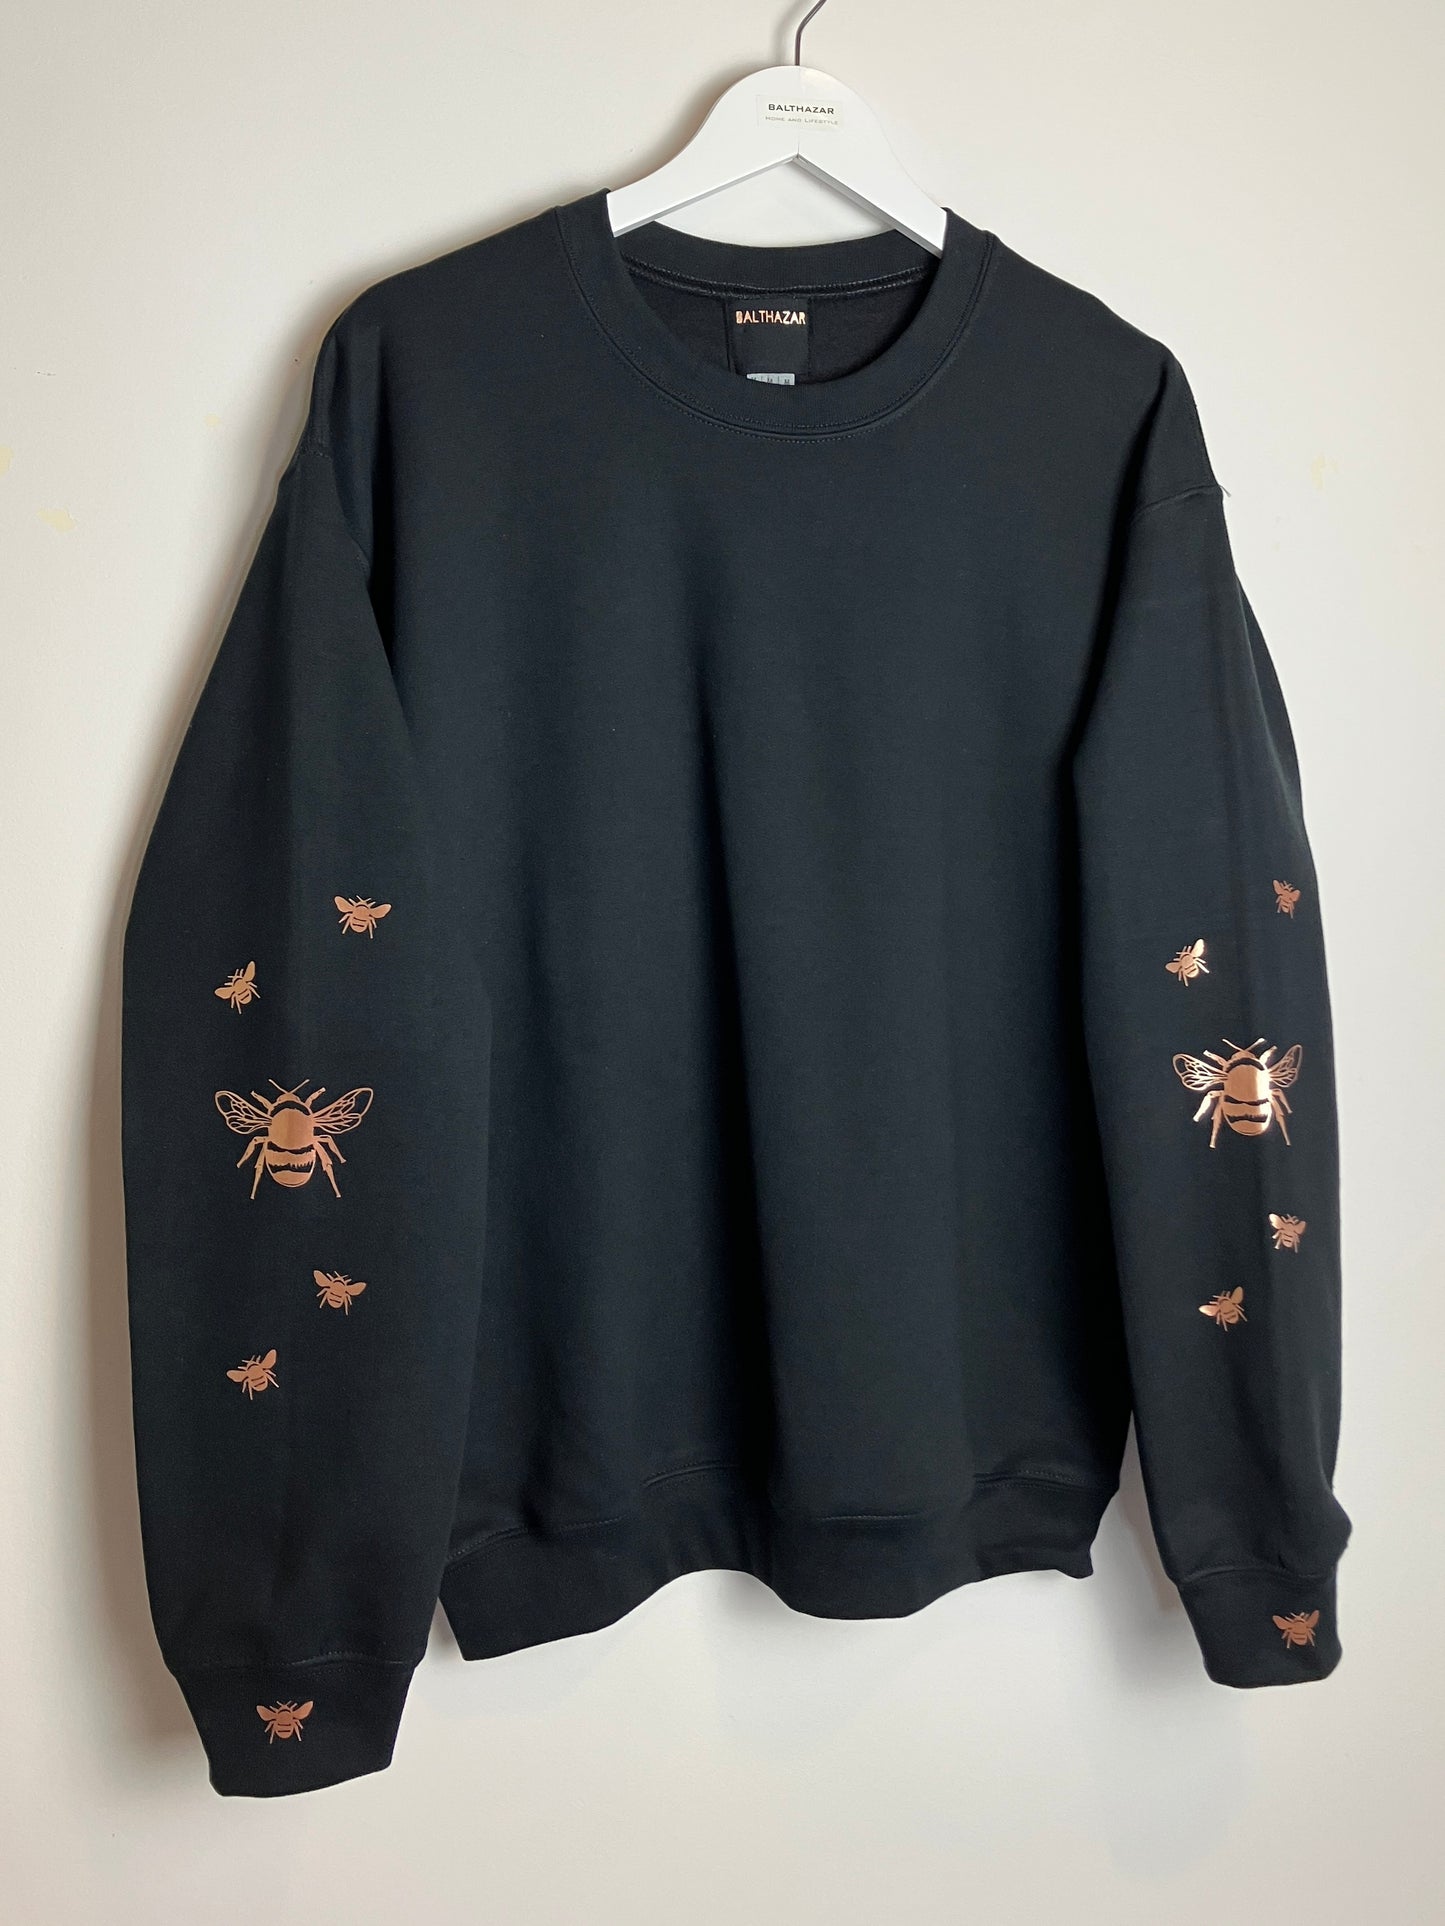 Bee sleeved sweatshirt - staggered spray design